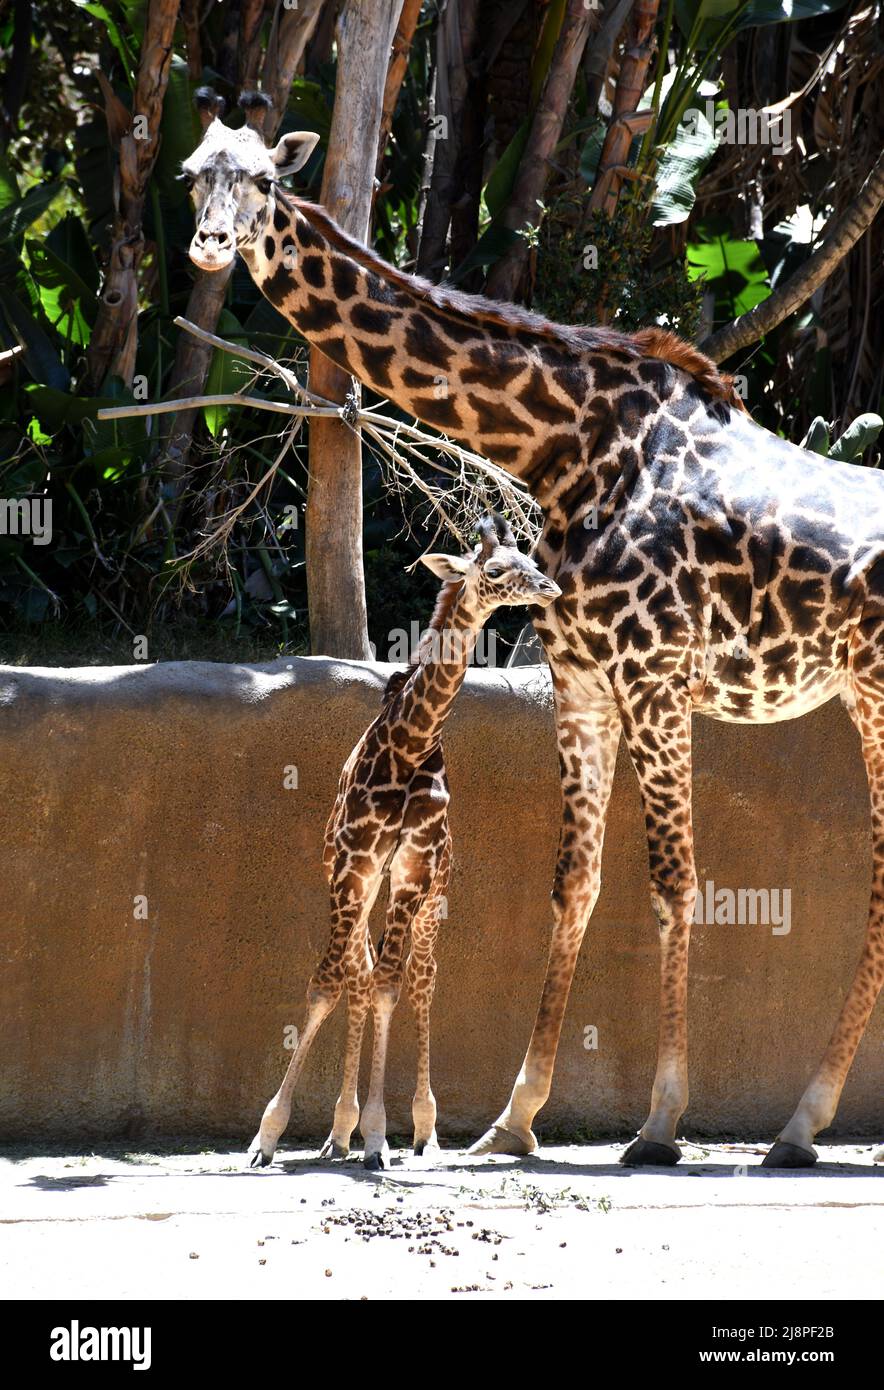 Los Angeles, Californie, États-Unis 13th mai 2022 Un nouveau bébé Maasai Giraffe, Masai Giraffe, né le 18 avril au zoo LA le 13 mai 2022 à Los Angeles, Californie, États-Unis. Photo par Barry King/Alay stock photo Banque D'Images